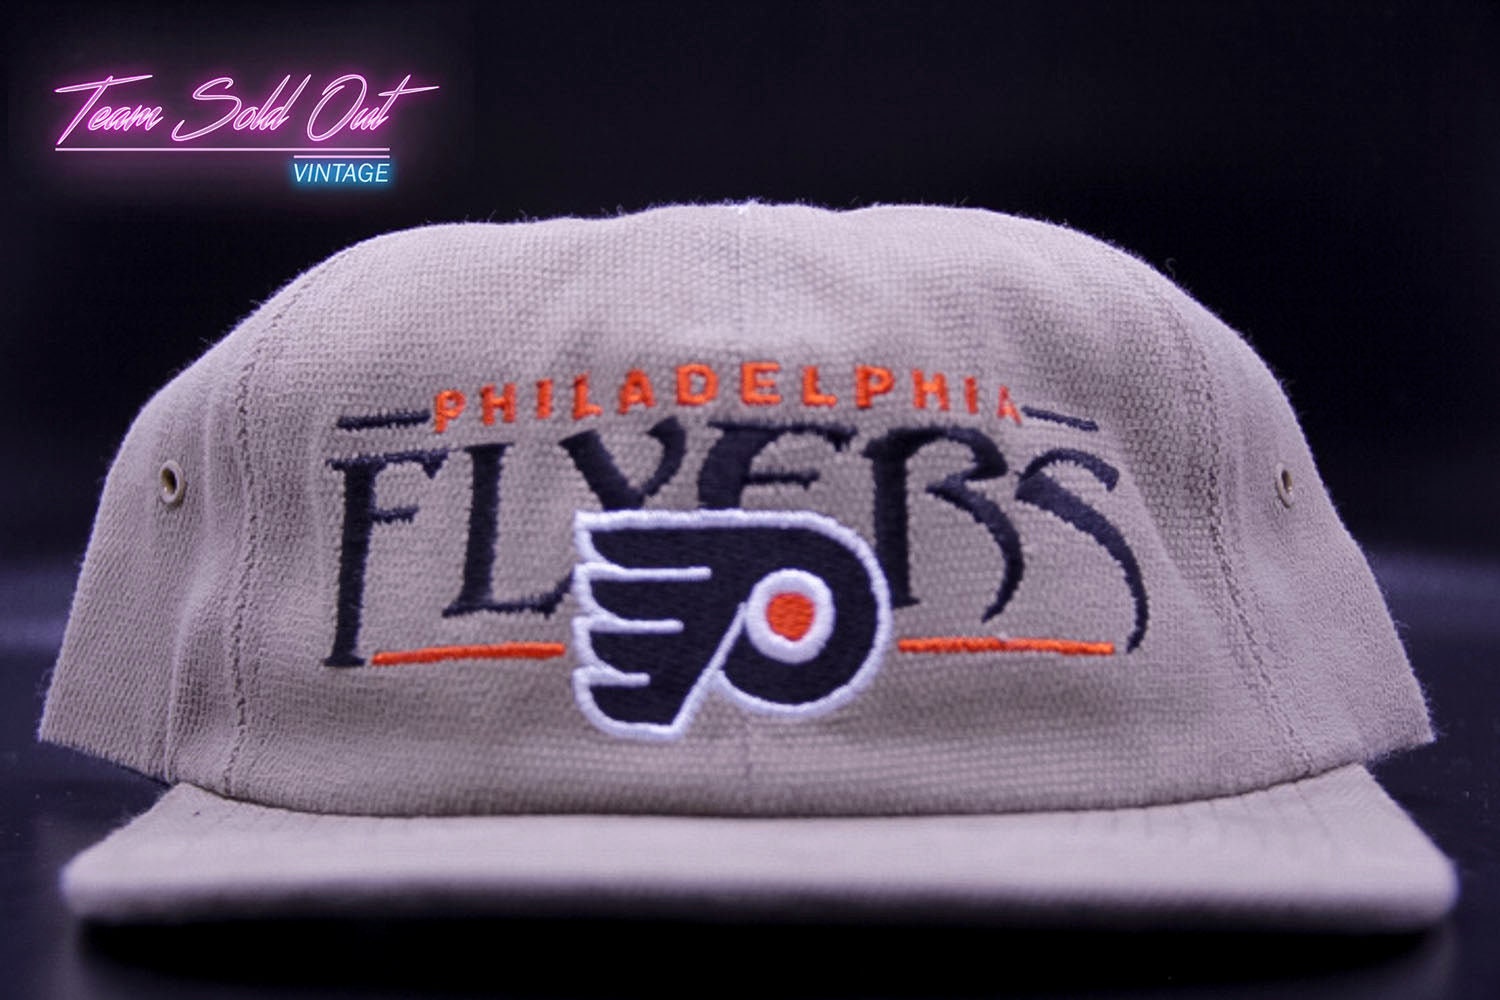 NHL Philadelphia Flyers Sports Specialties Hat